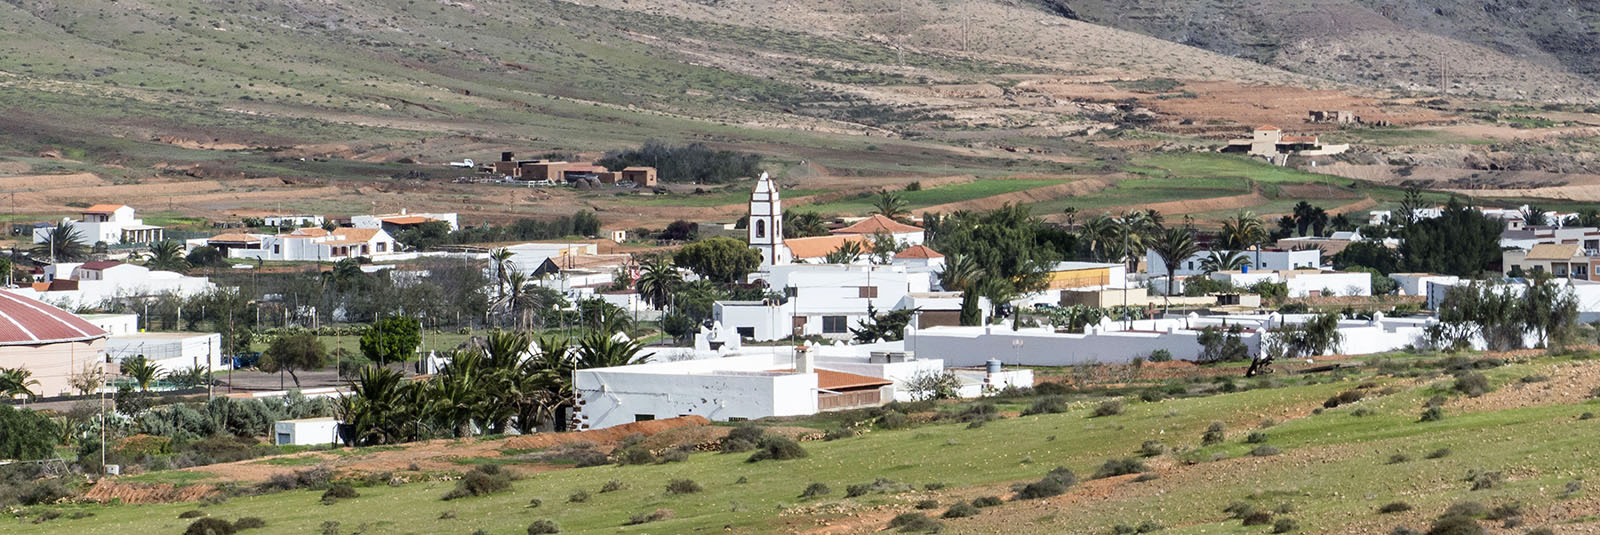 Fuerteventura, Tetir, Iglesia de Santo Domingo de Guzman, www.sunnyfuerte.com